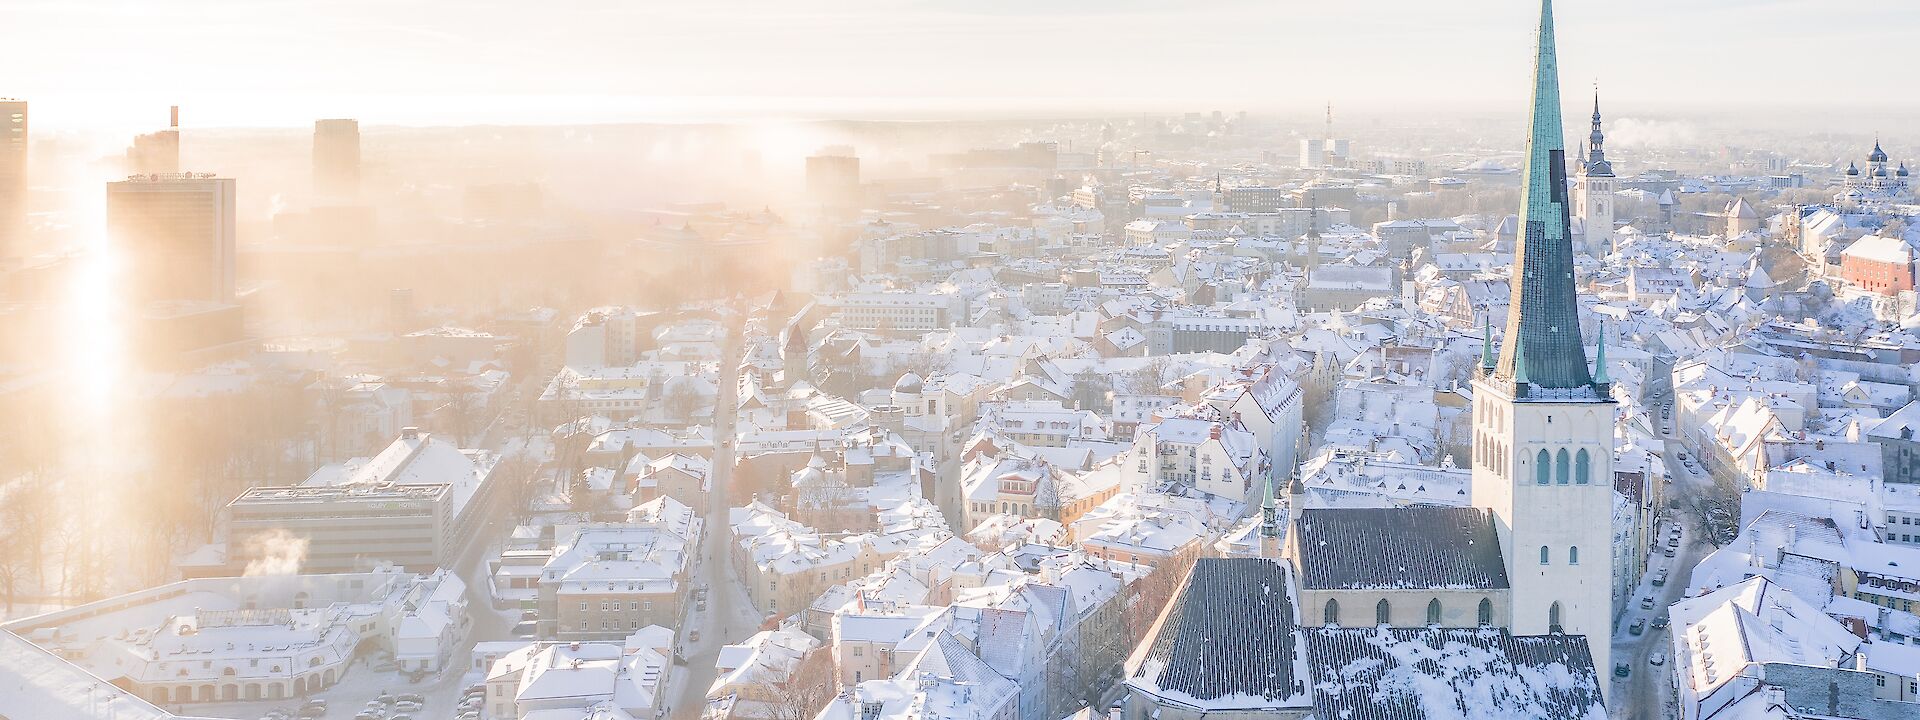 Tallinn in the snow, Estonia. Jaanus Jagomagi@Unsplash